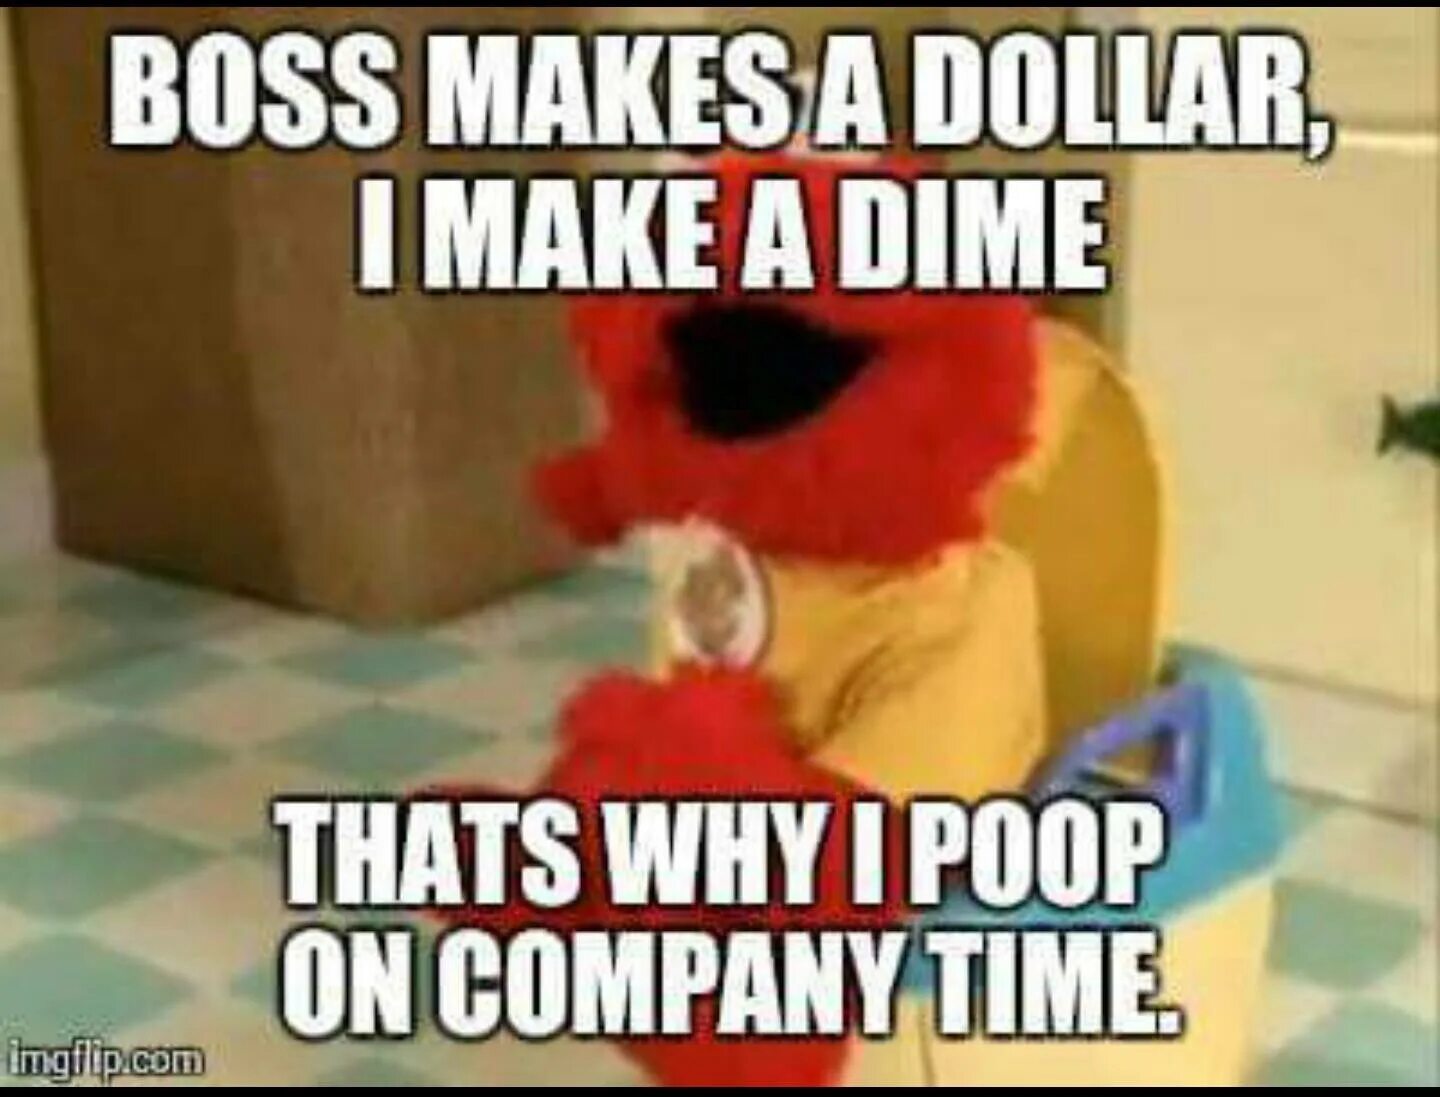 Boss makes a Dollar, i make a Dime. Boss makes a Dollar, i make a Dime i Play on Company time. Make a Dime Ronnin минус. Https poop com co